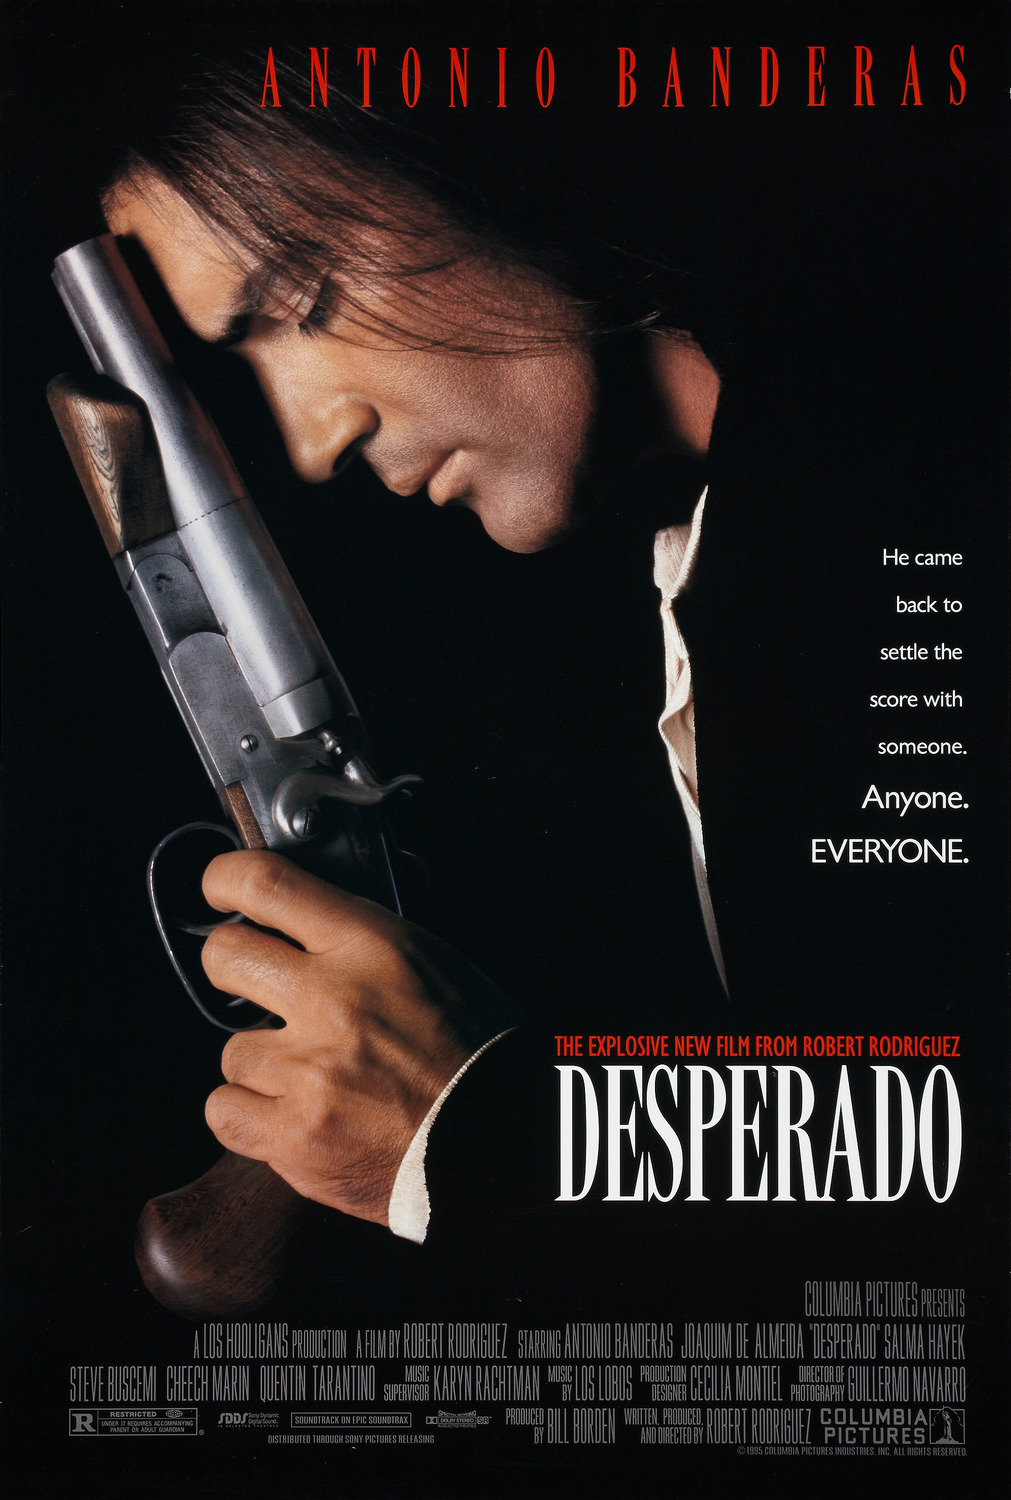 Extra Large Movie Poster Image for Desperado 